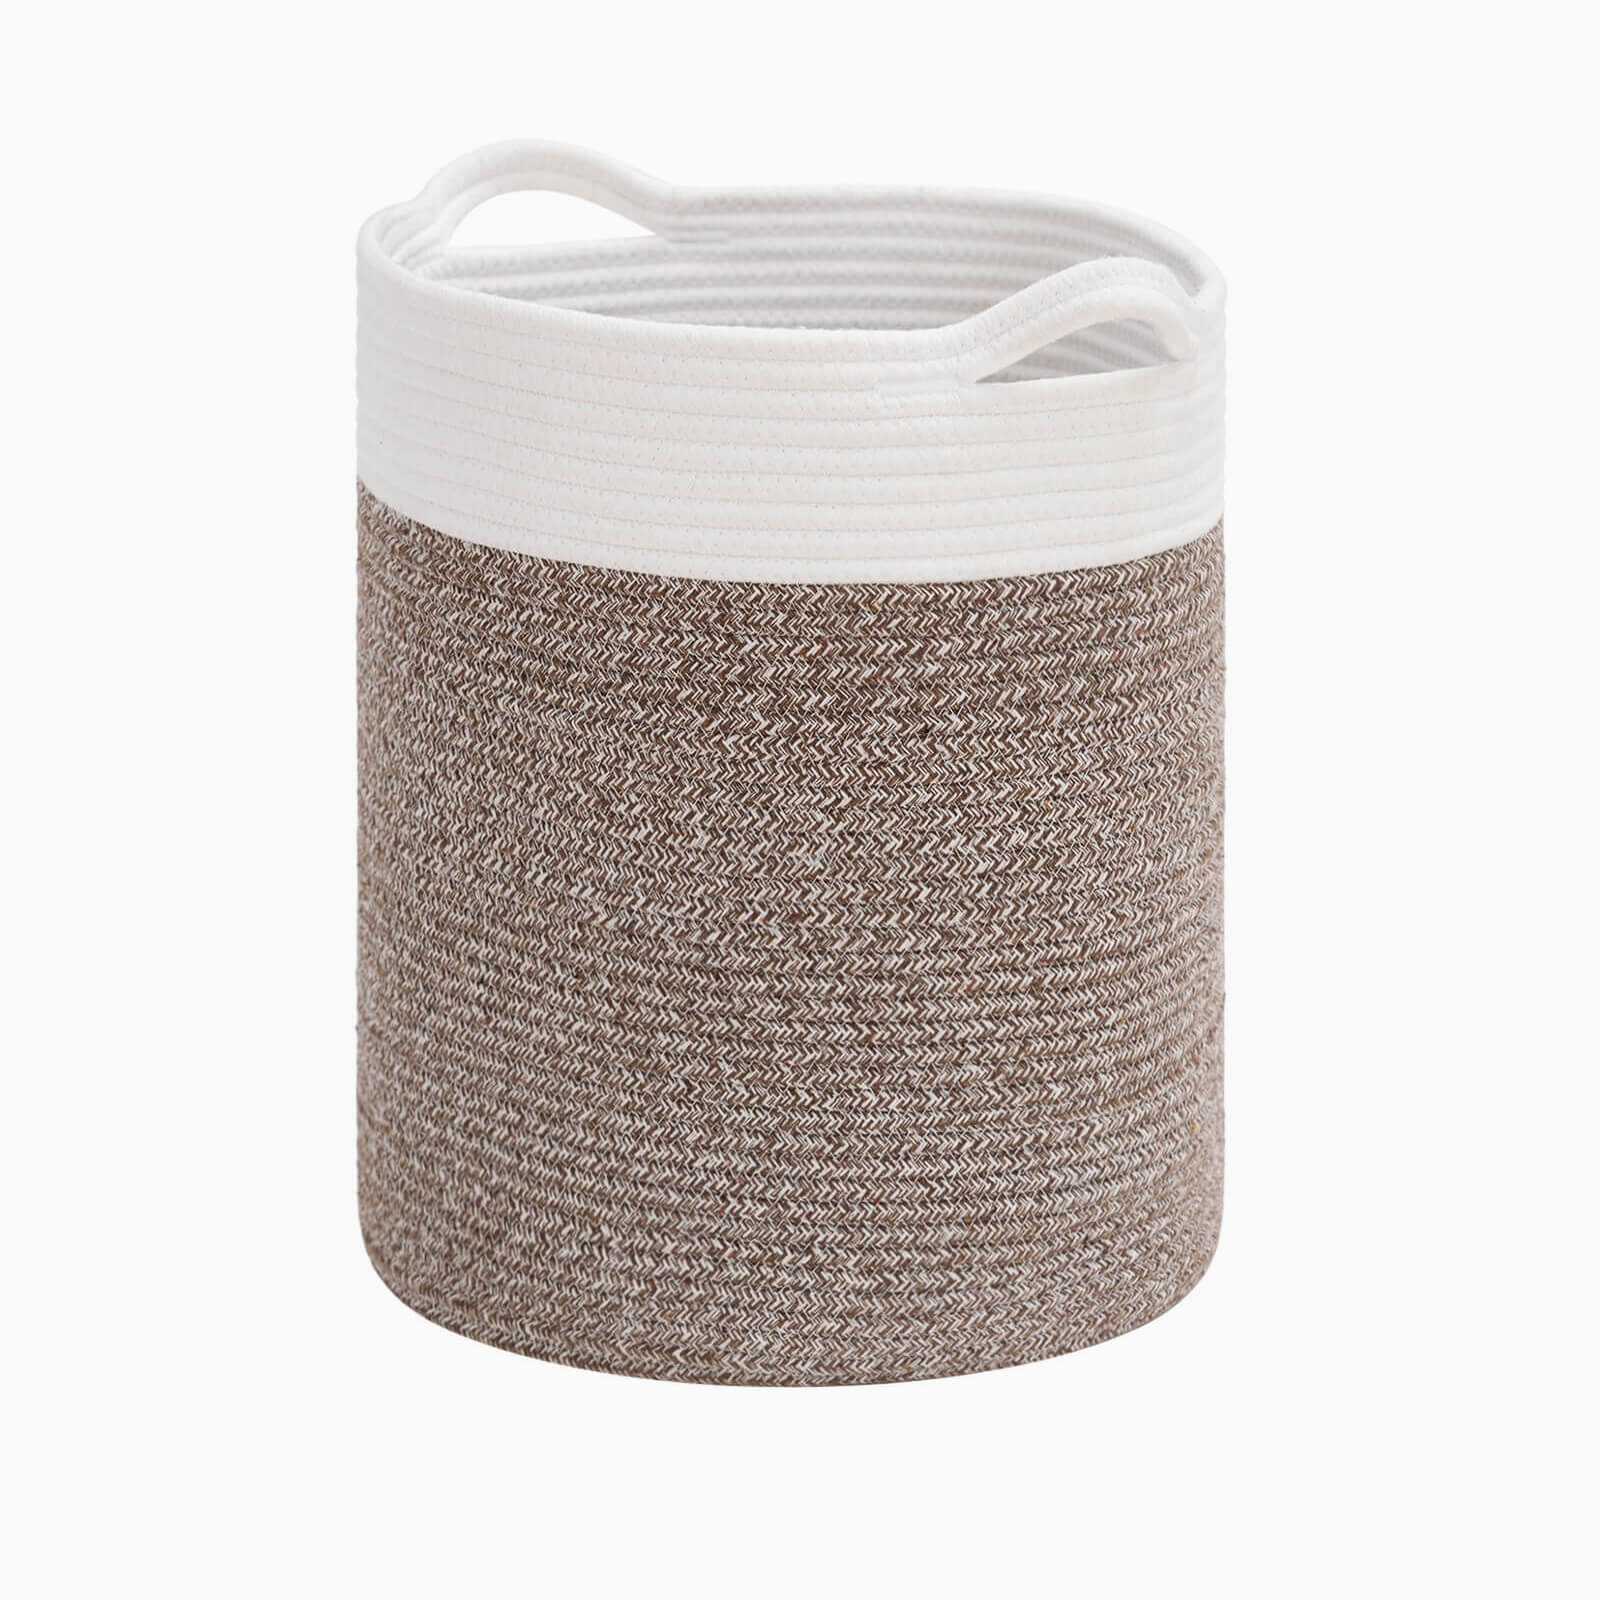 Goodpick Cotton Rope Storage Basket Yoga Mat Storage